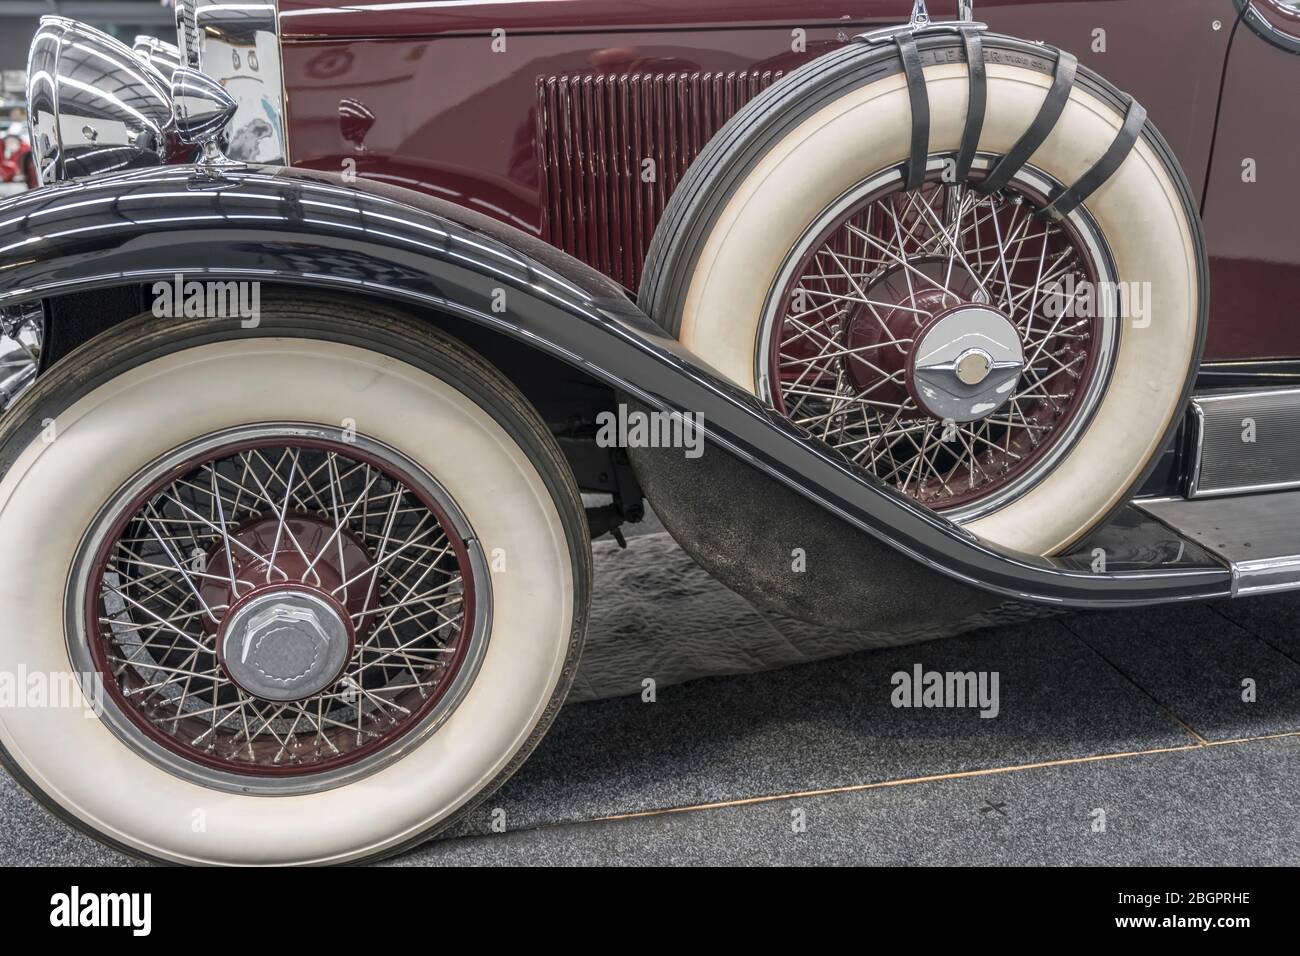 https://c8.alamy.com/comp/2BGPRHE/detail-of-mudguard-and-spoke-wheels-of-vintage-car-shot-at-wanaka-otago-south-island-new-zealand-2BGPRHE.jpg